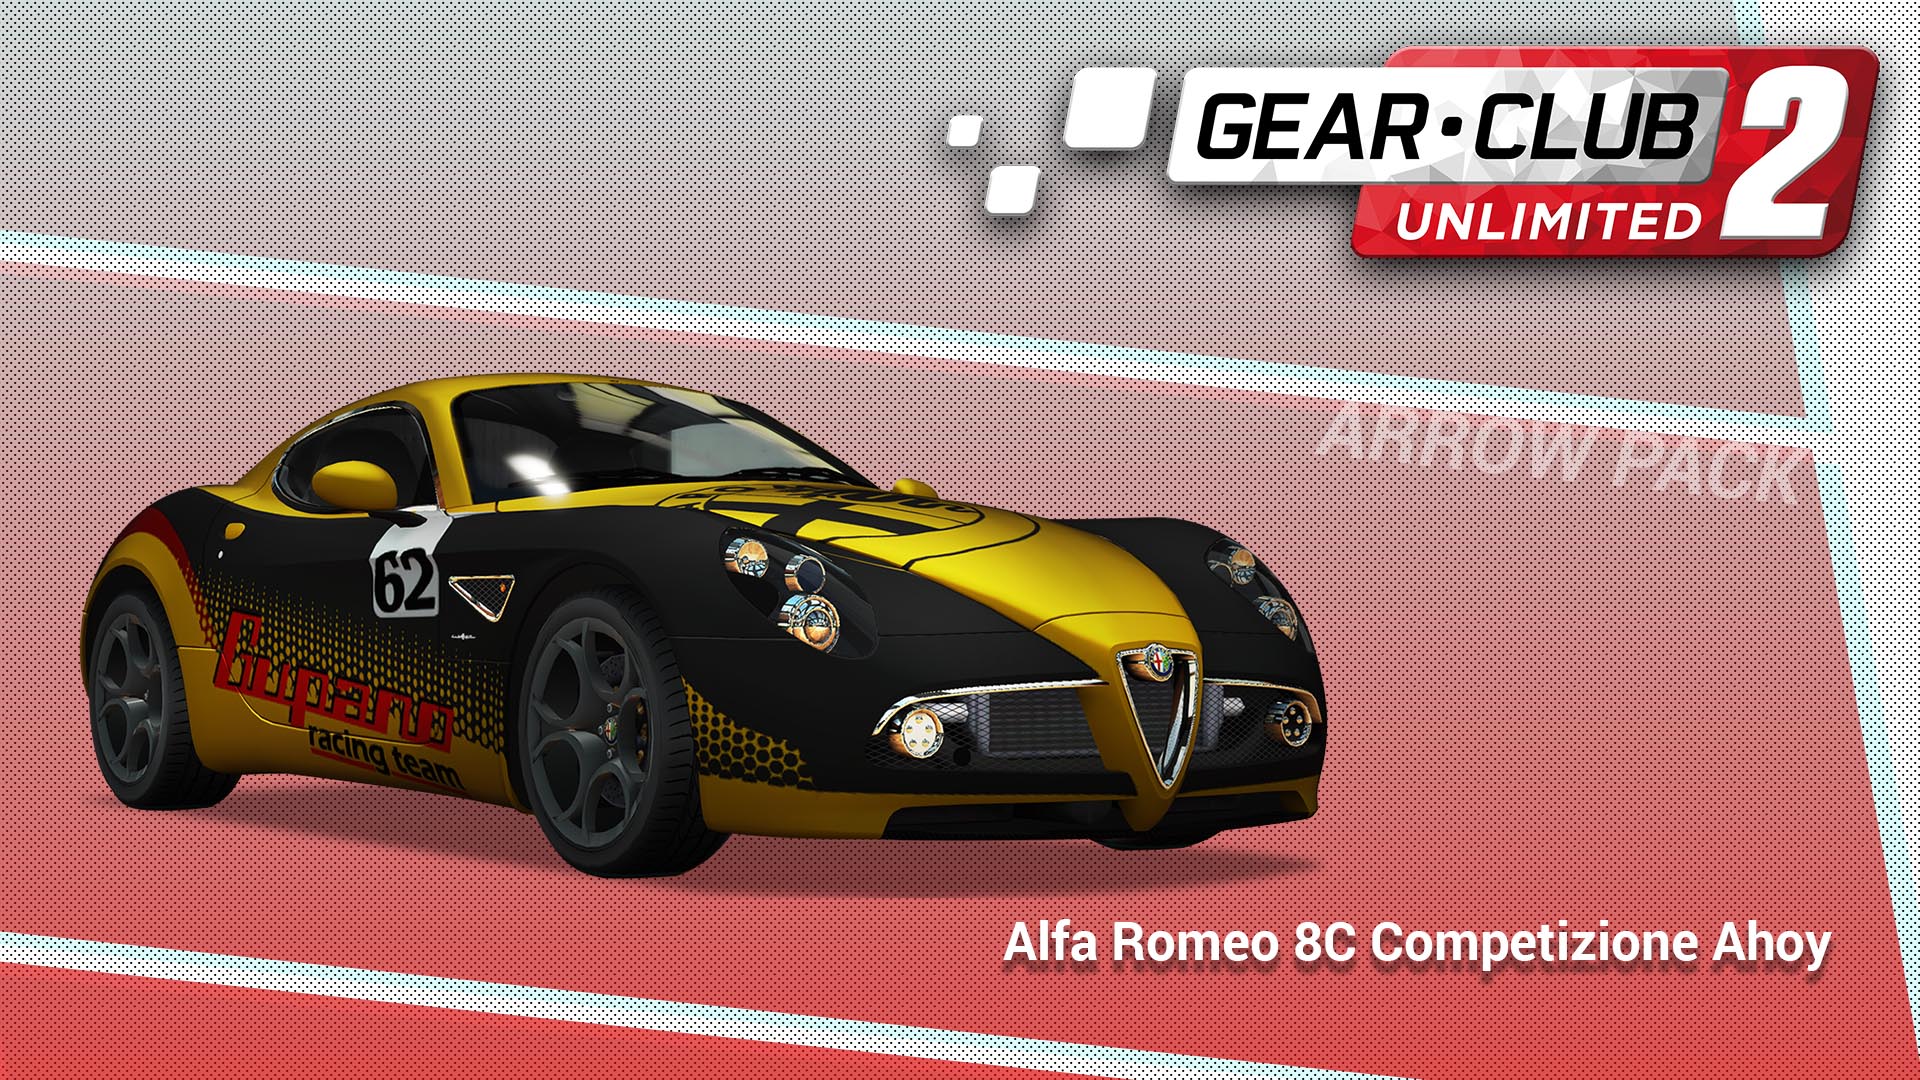 Alfa Romeo 8C Competizione Ahoy - Gear.Club Unlimited 2